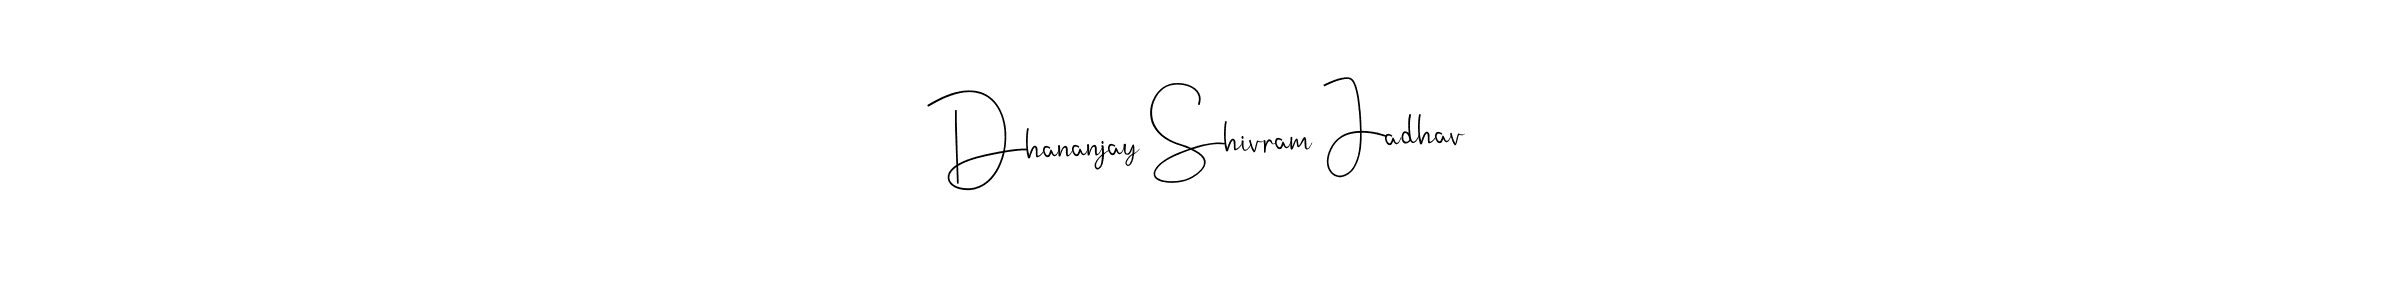 Dhananjay Shivram Jadhav stylish signature style. Best Handwritten Sign (Andilay-7BmLP) for my name. Handwritten Signature Collection Ideas for my name Dhananjay Shivram Jadhav. Dhananjay Shivram Jadhav signature style 4 images and pictures png